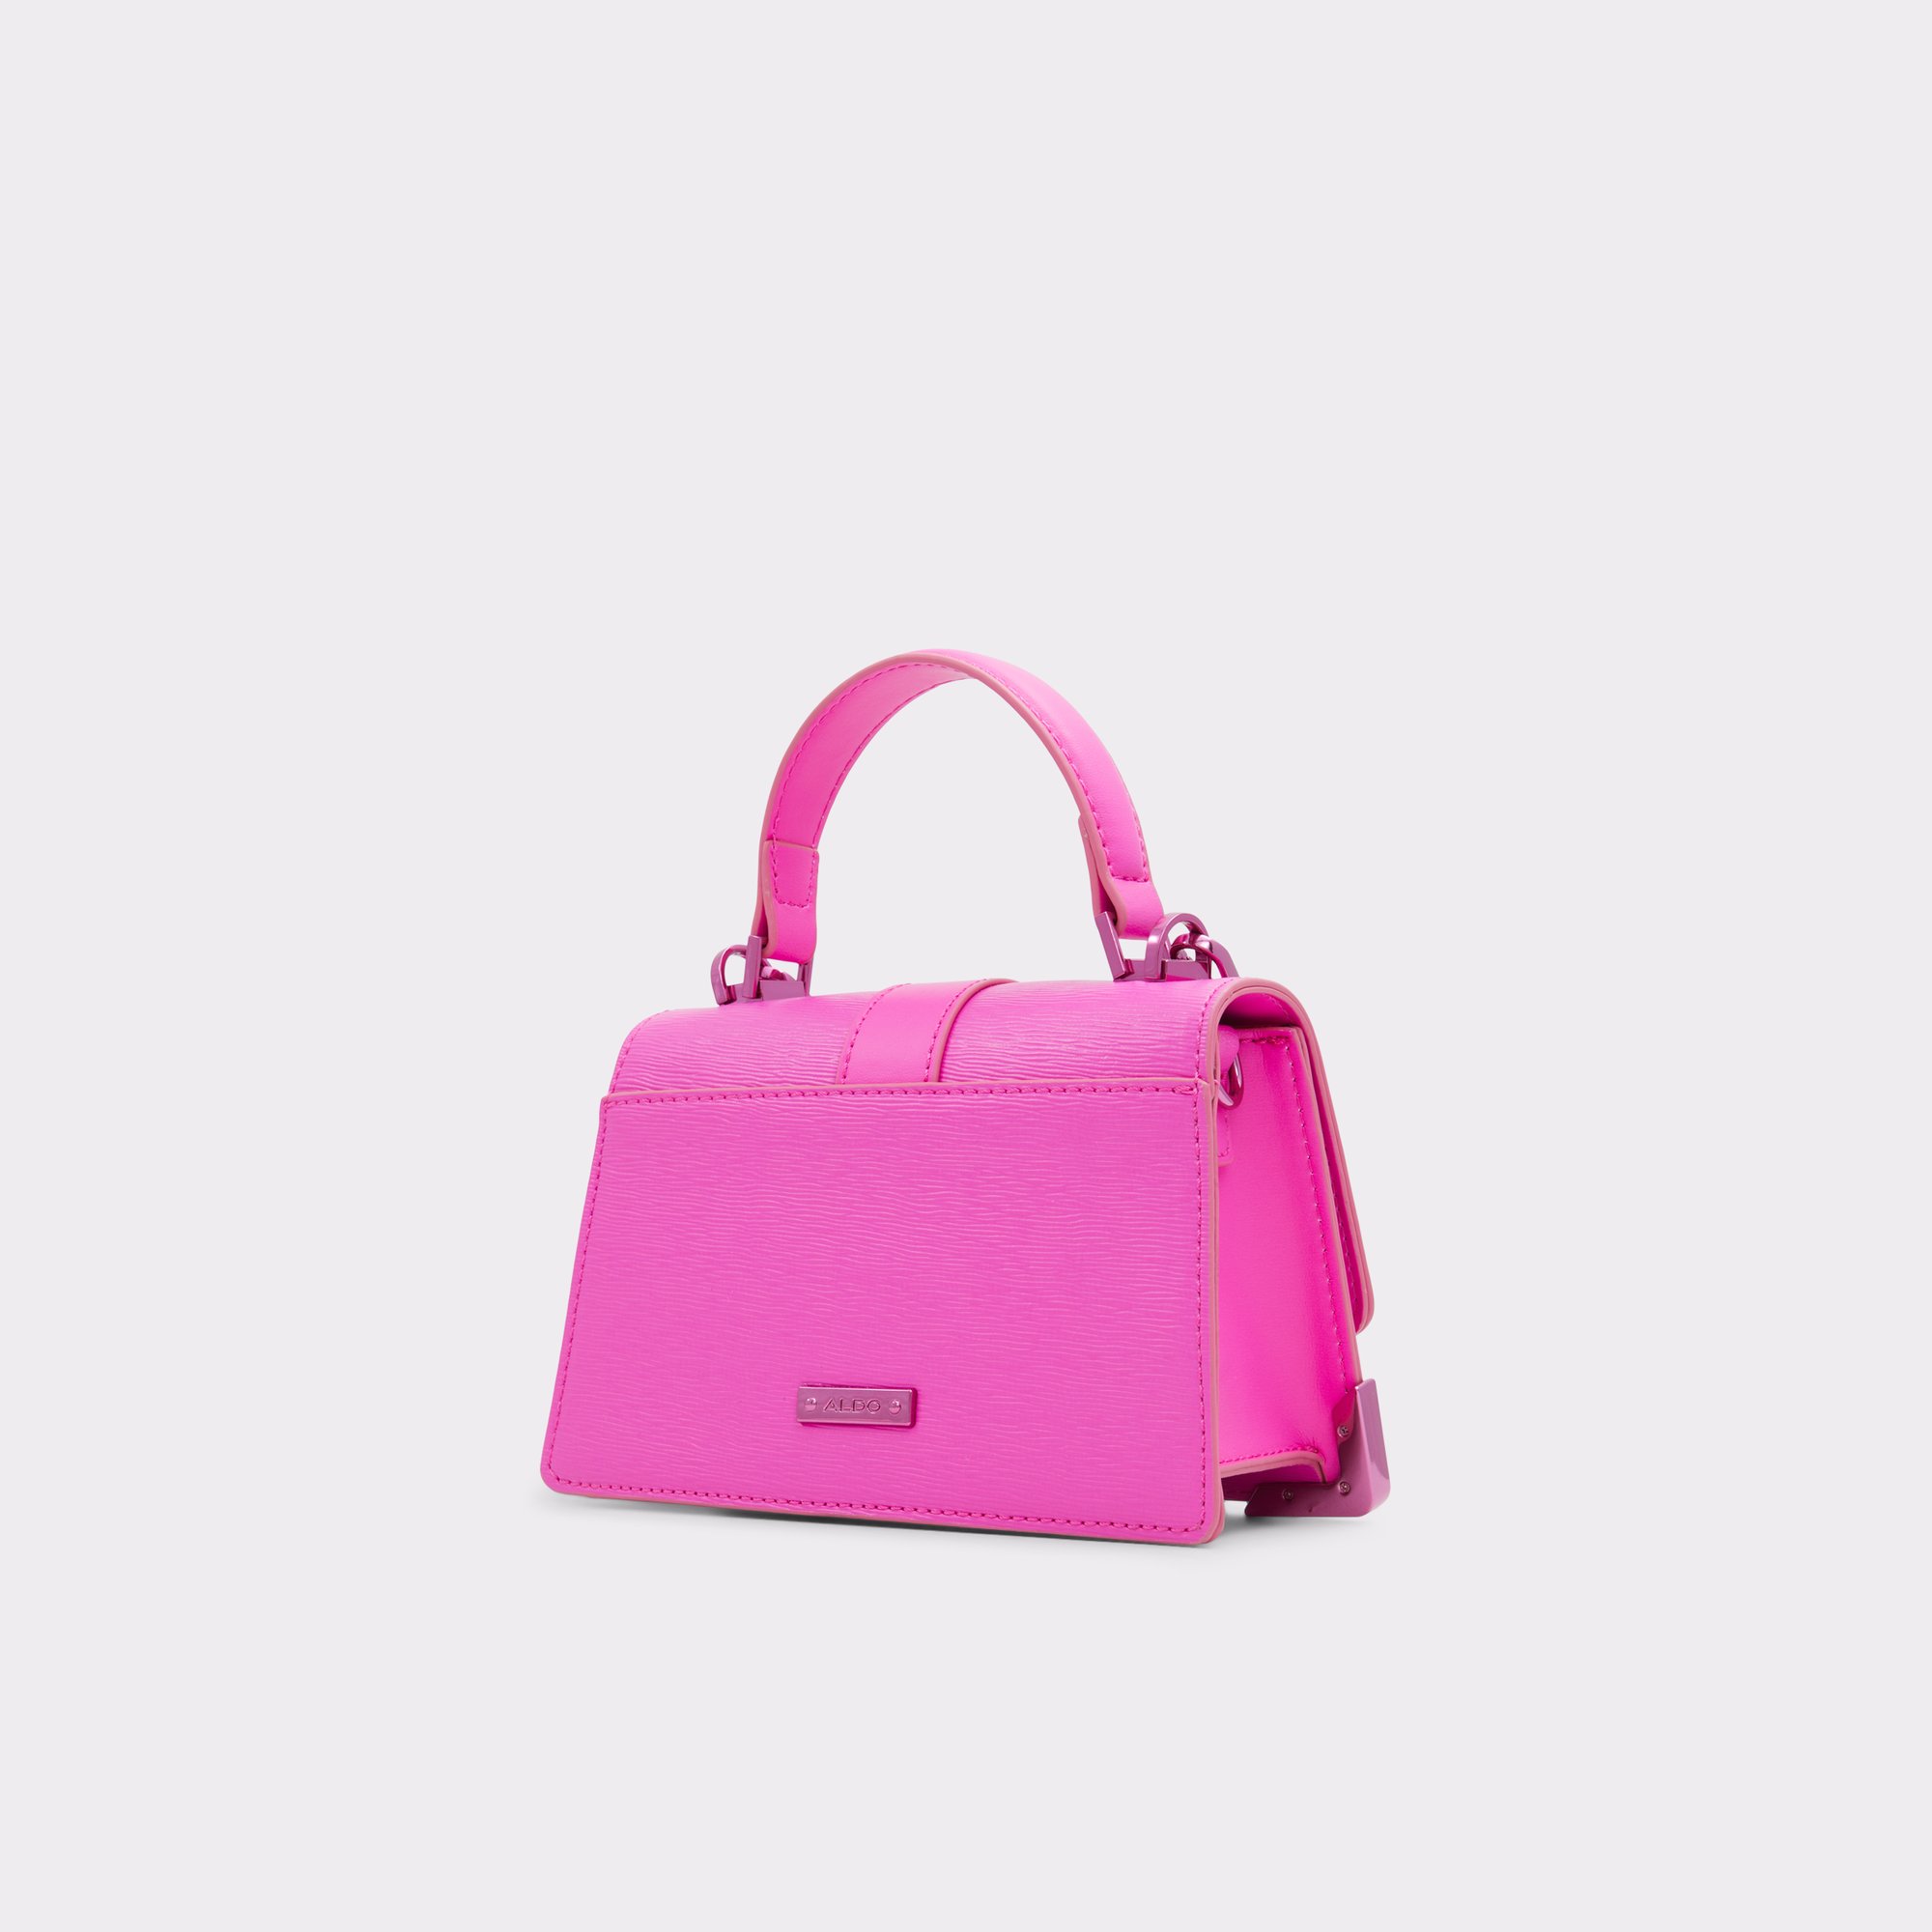 Aussey Fuchsia Women's Handbags